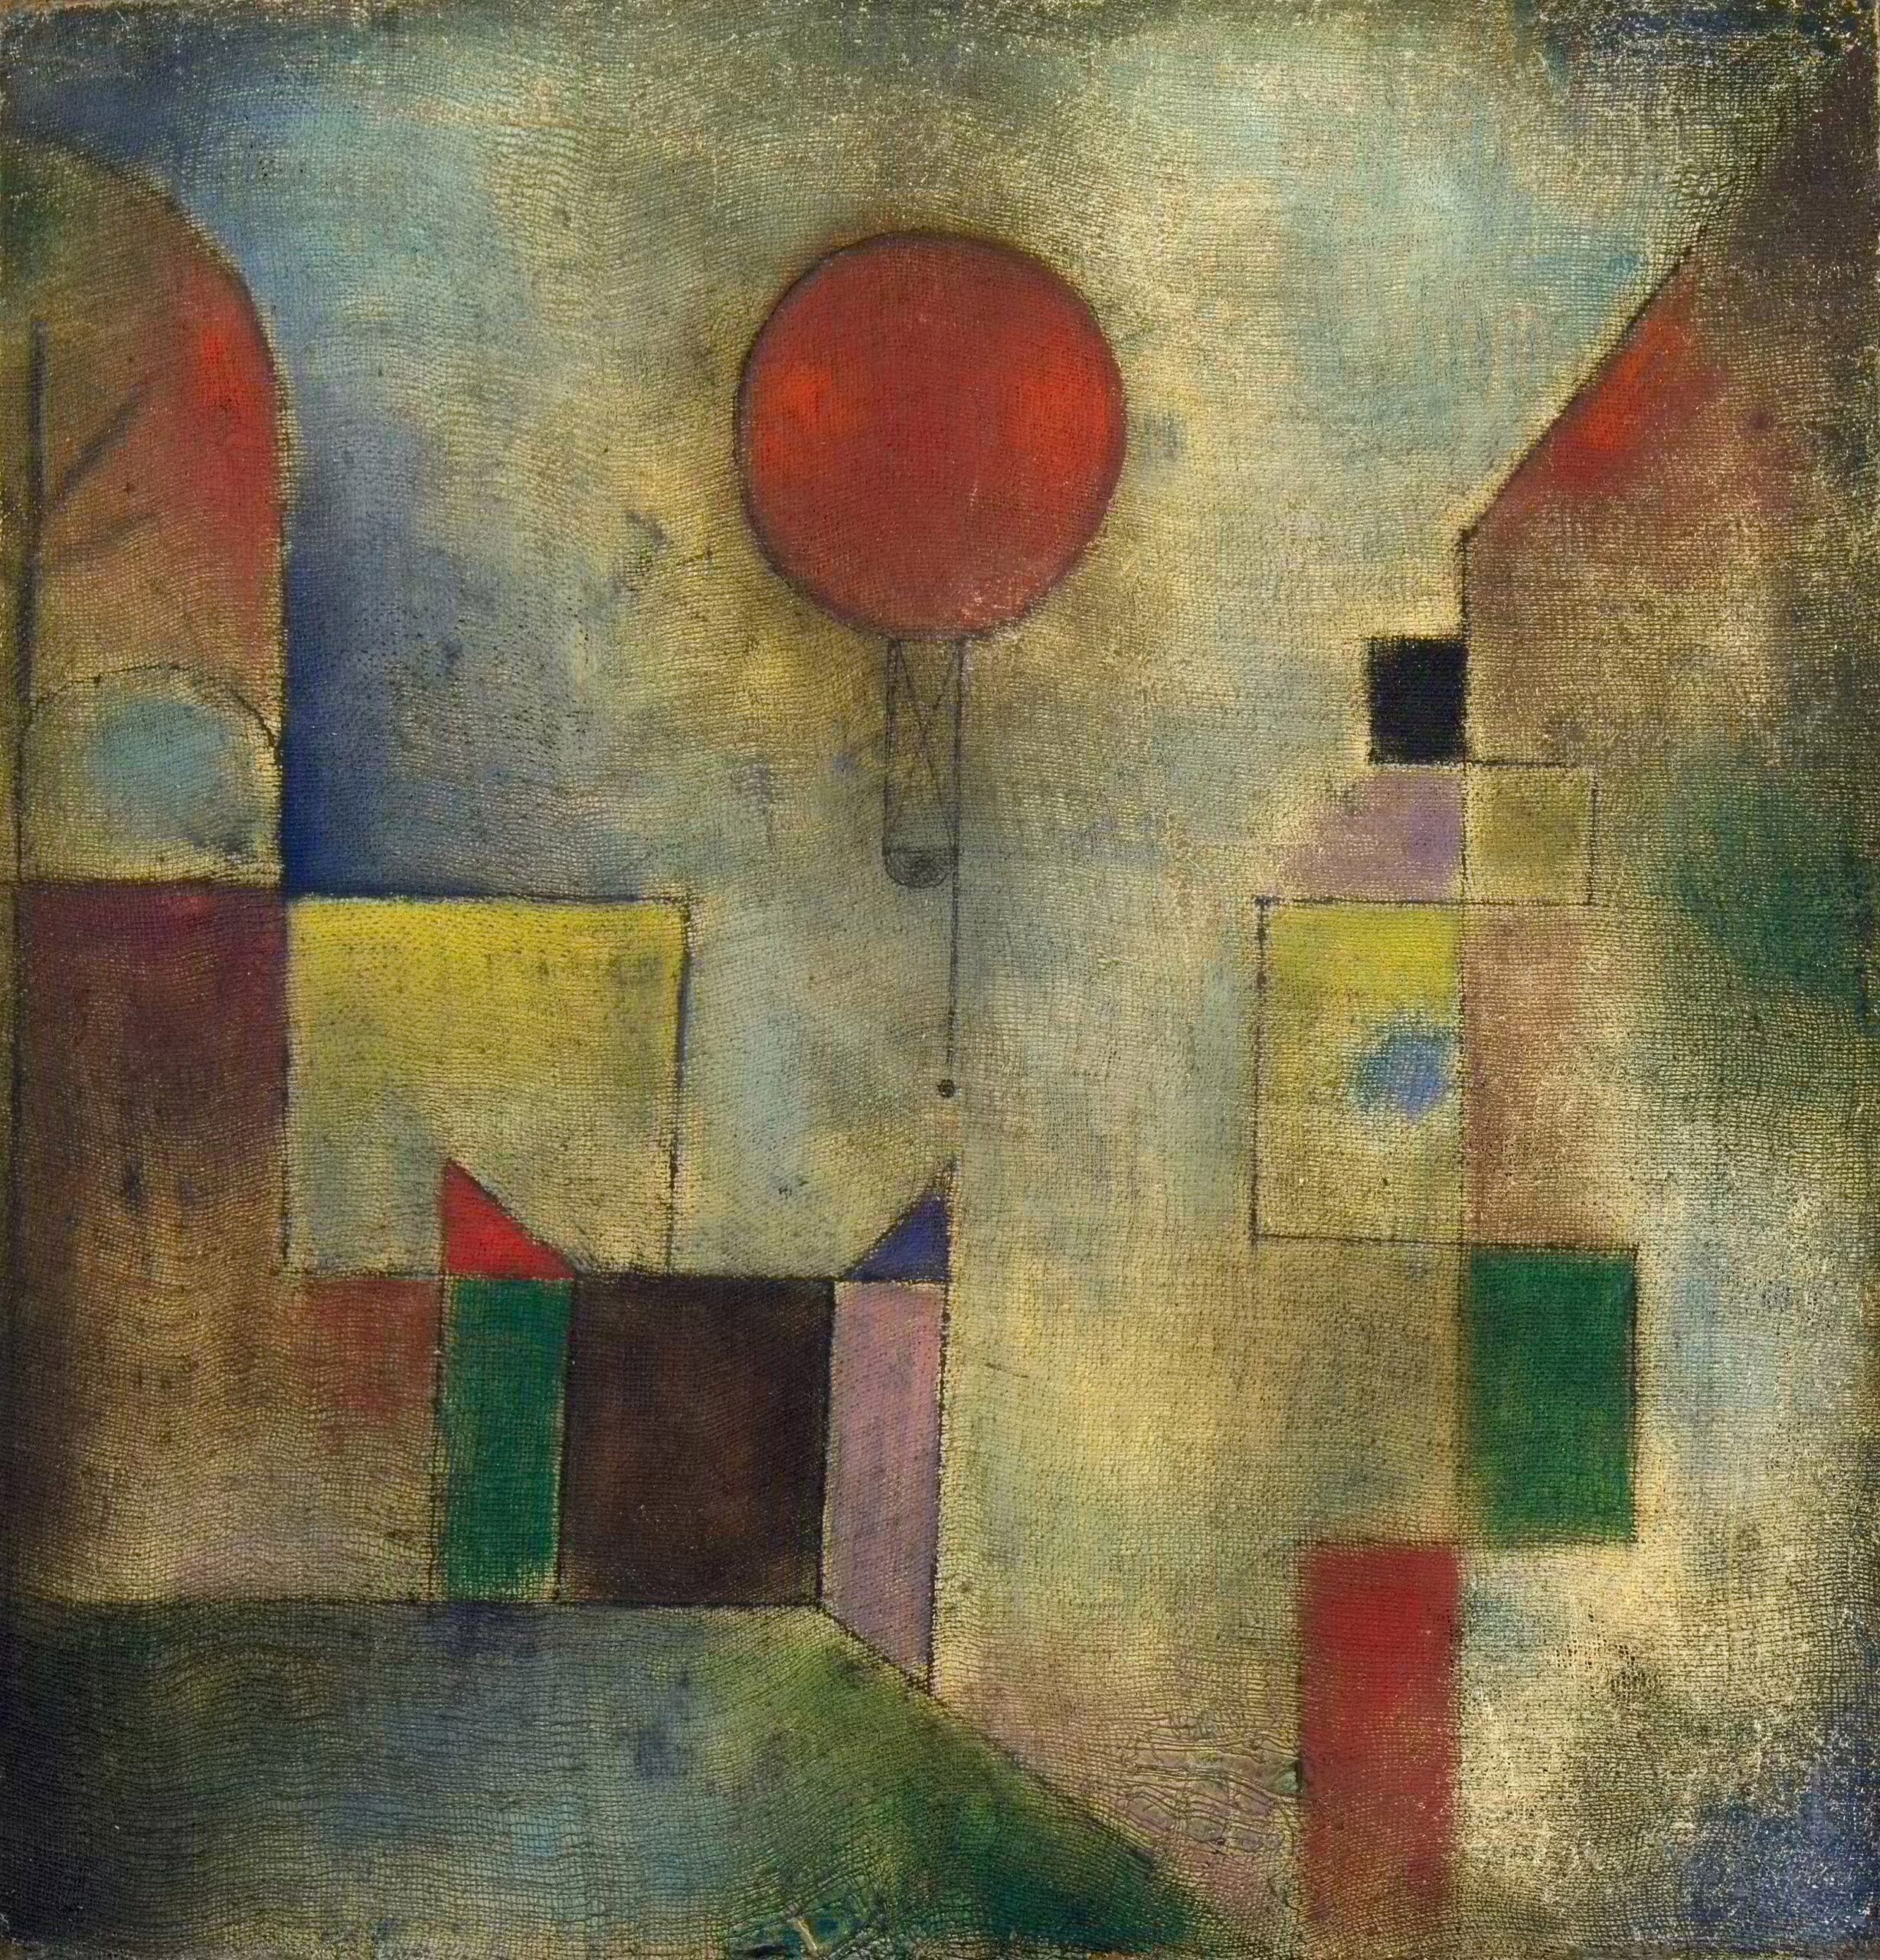 Red Balloon - Paul Klee